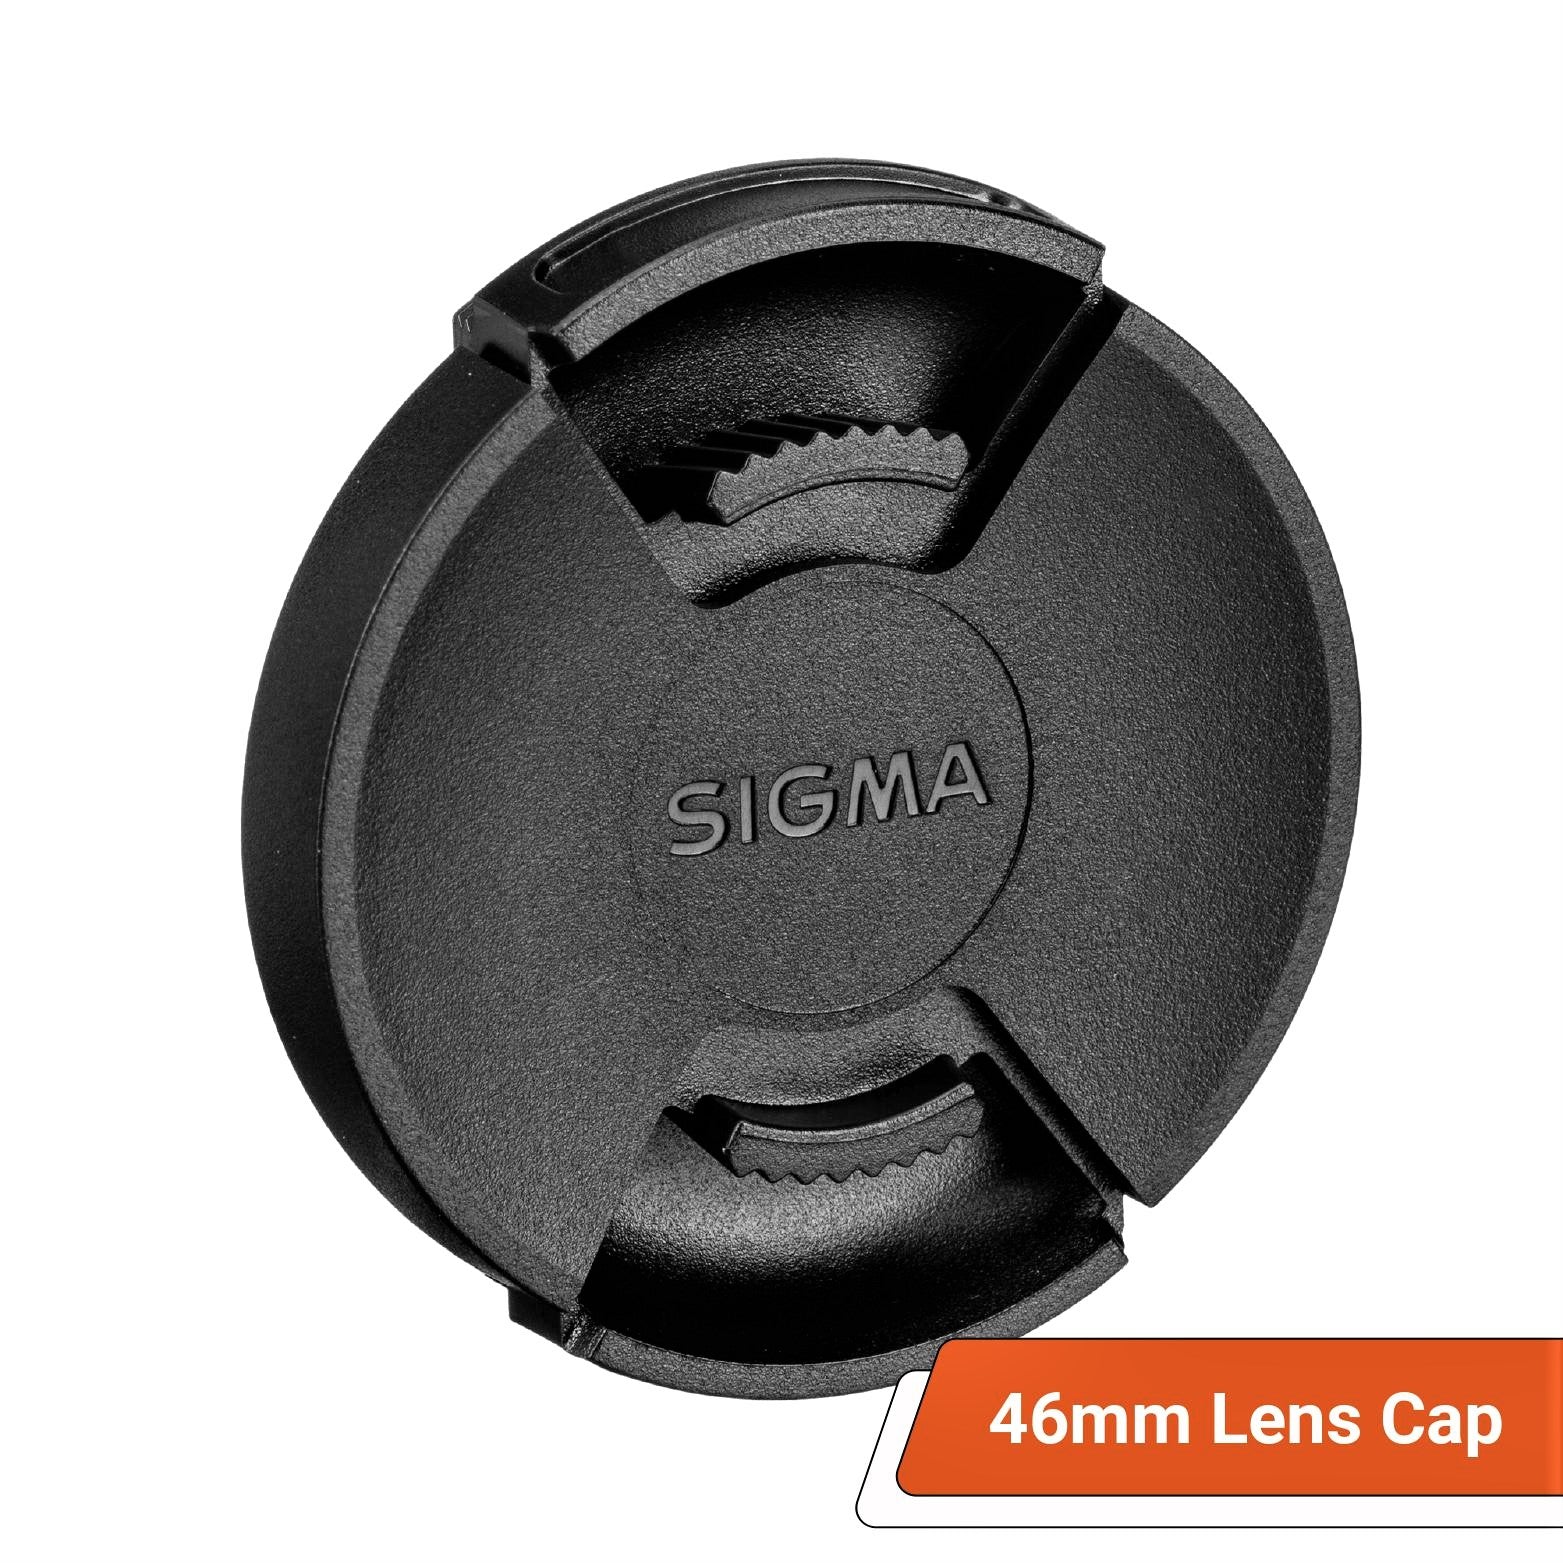 Sigma LCF-46 III 46mm Lens Cap